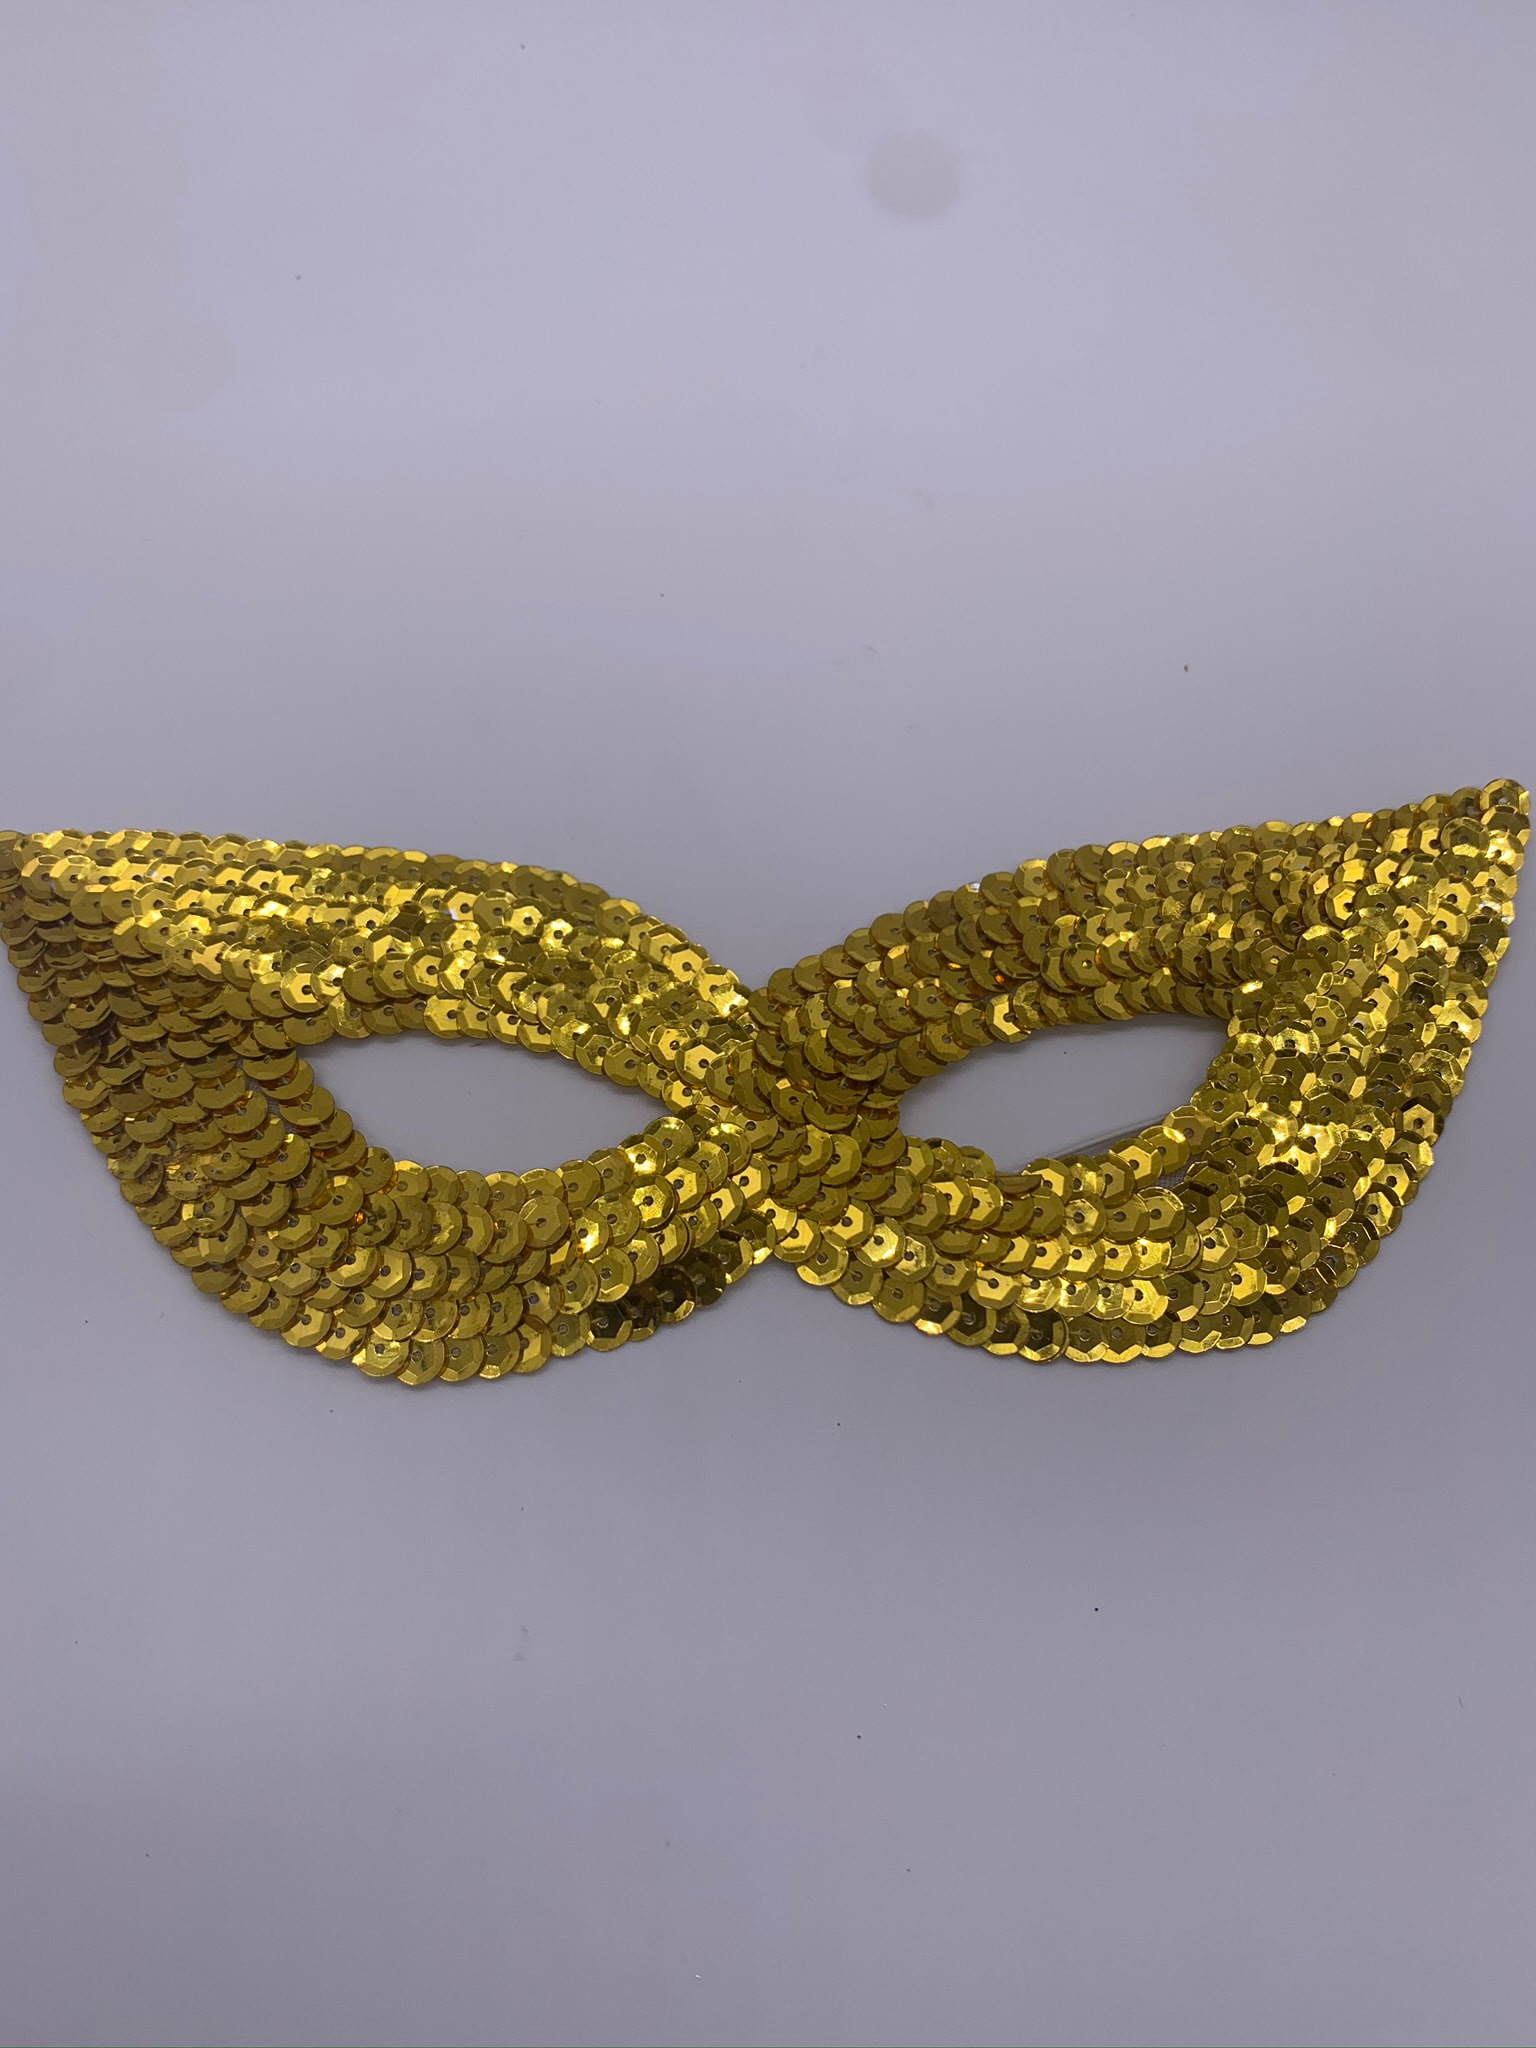  Mysense Gold Body Glitter Stick, Mardi Gras Face